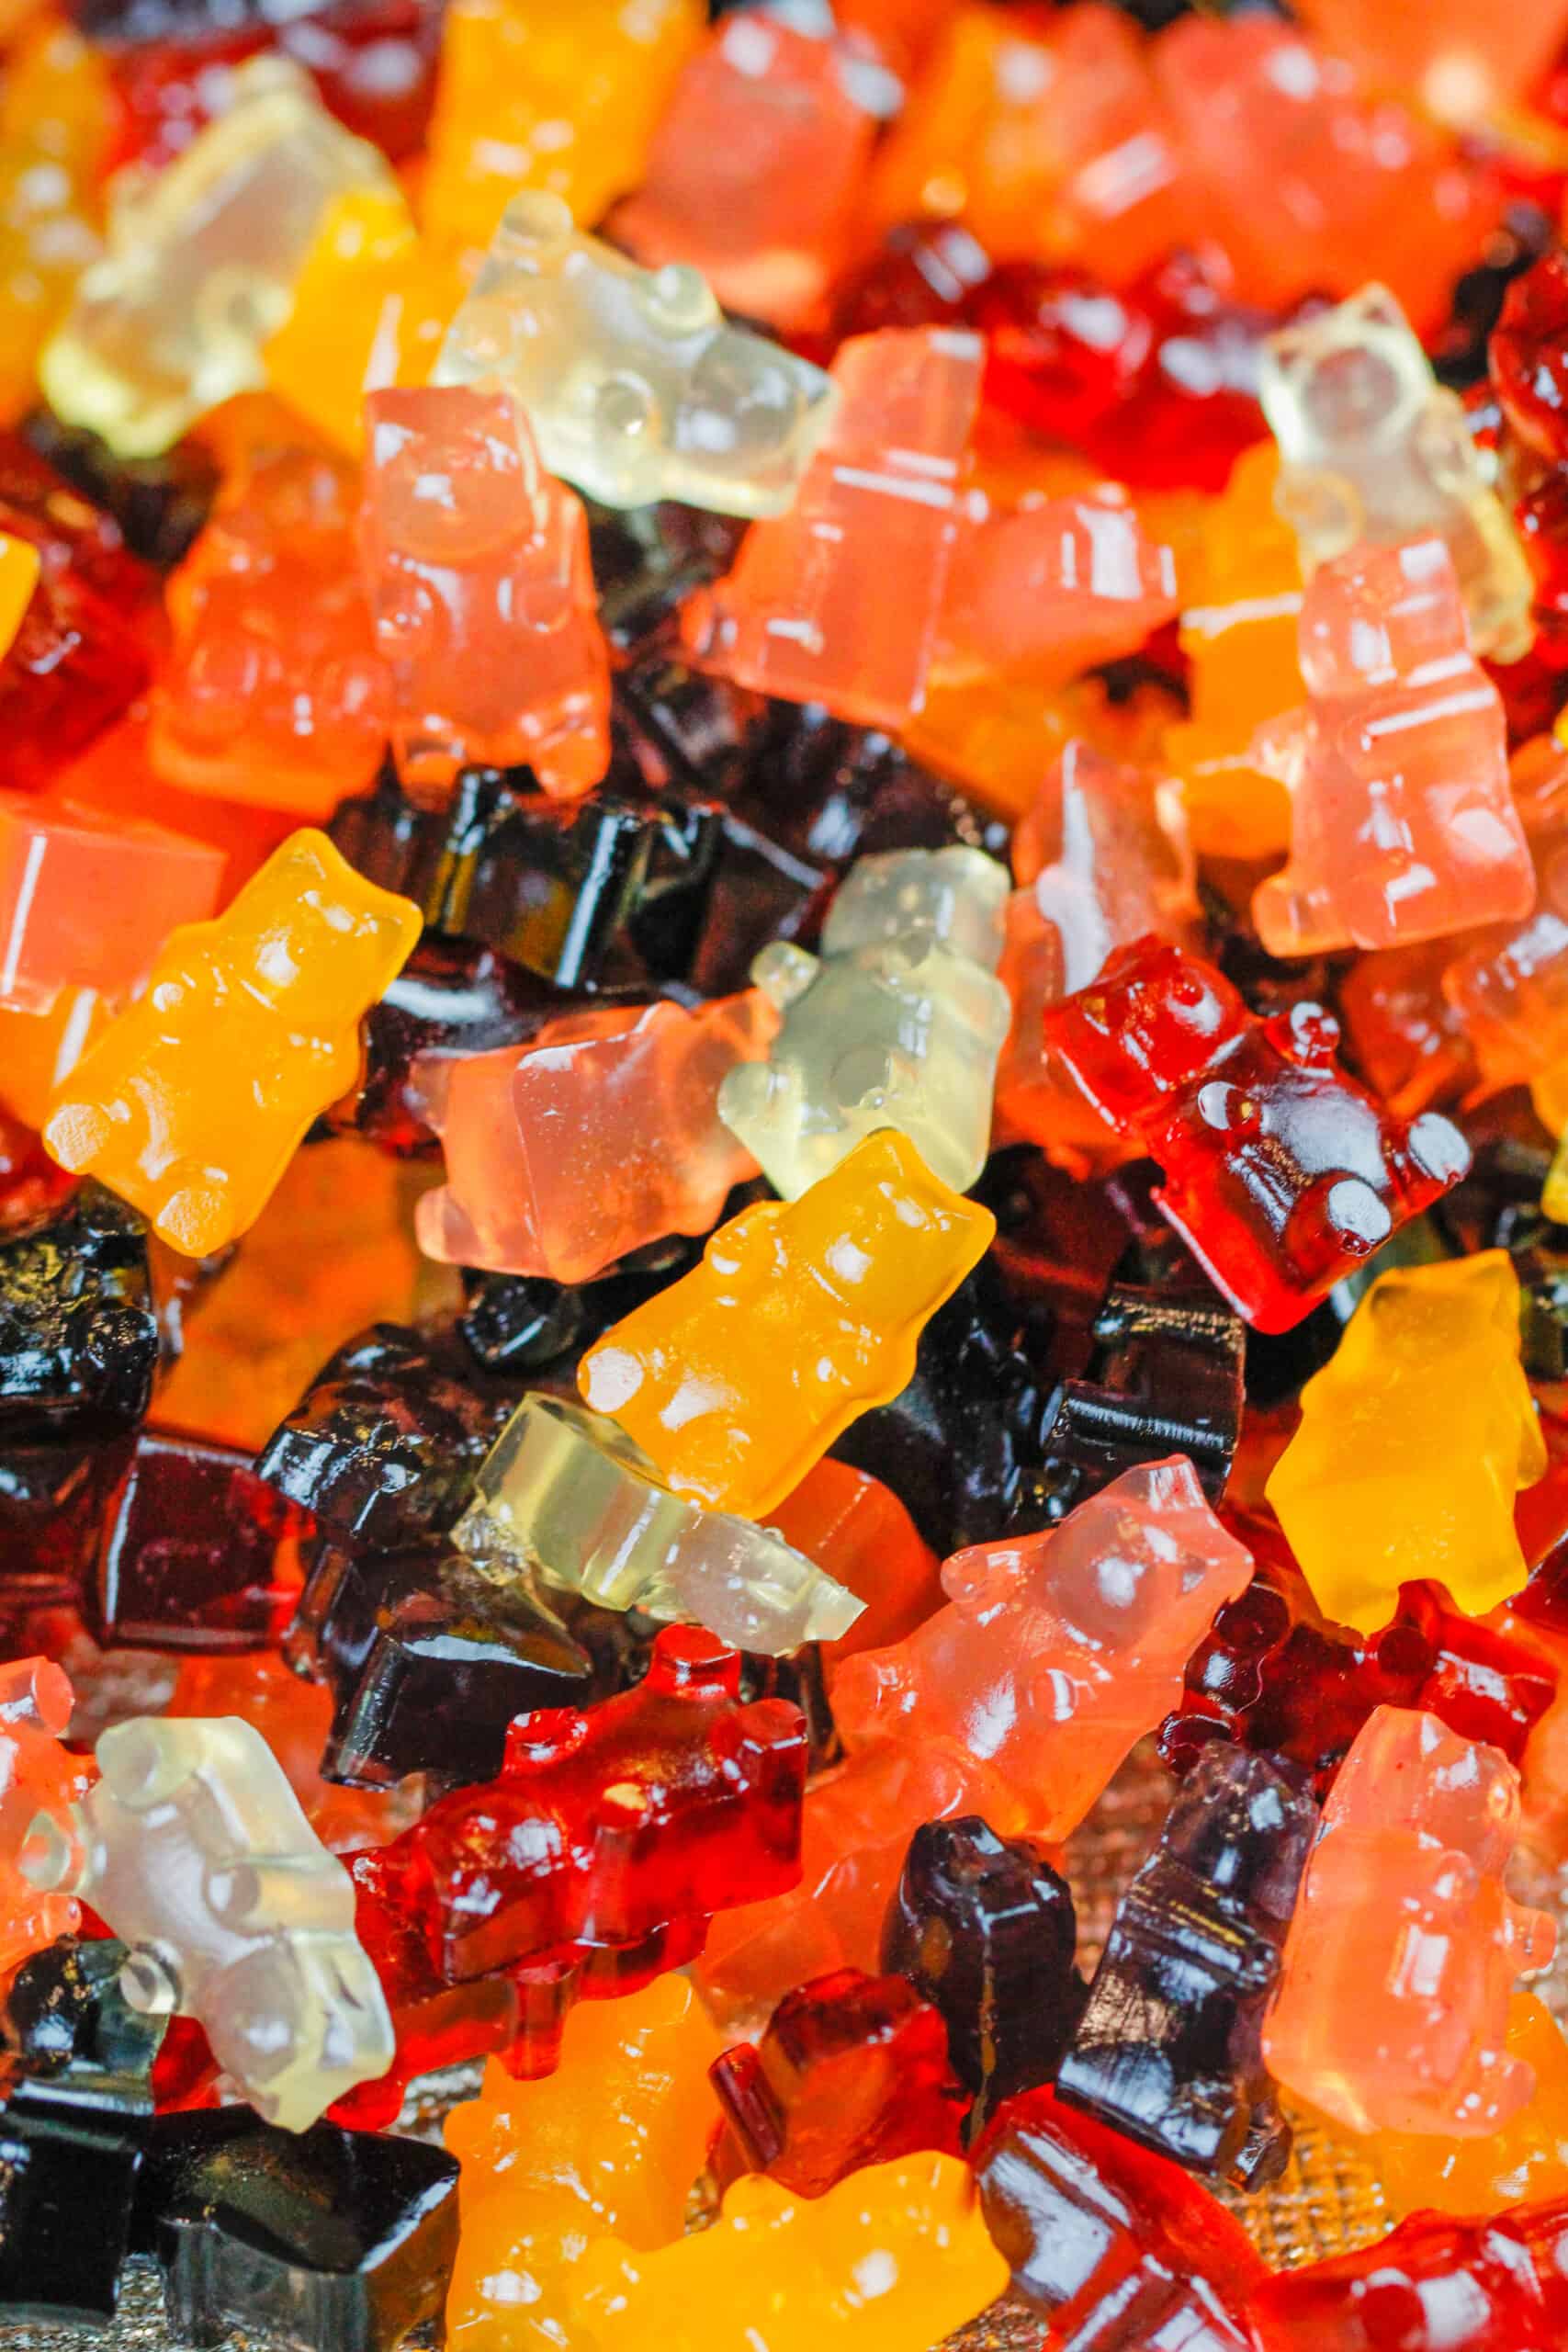 How to Make Homemade Healthy Gummy Bears